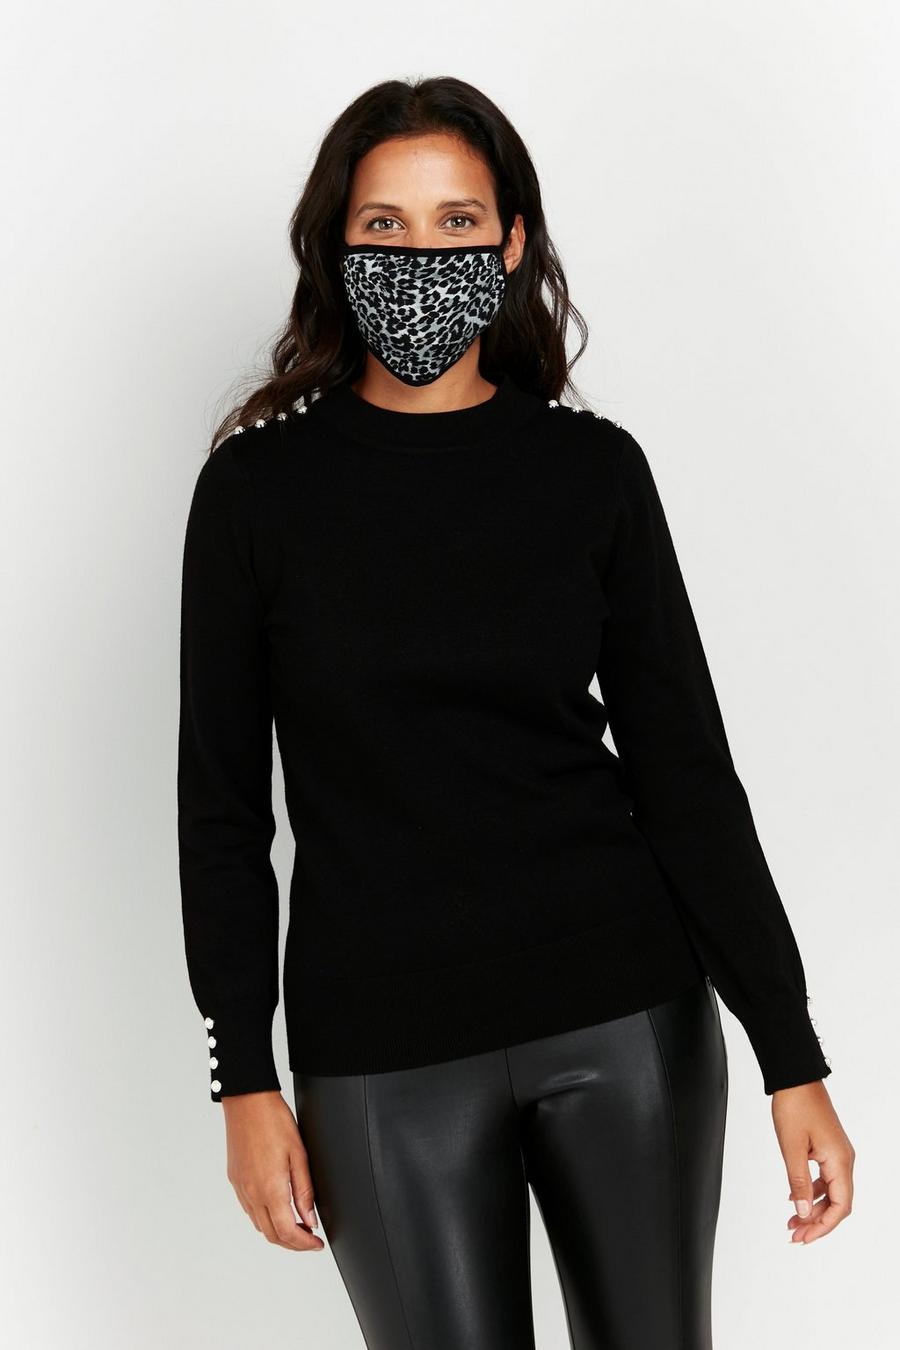 2 Pack Black and Animal Print Face Masks